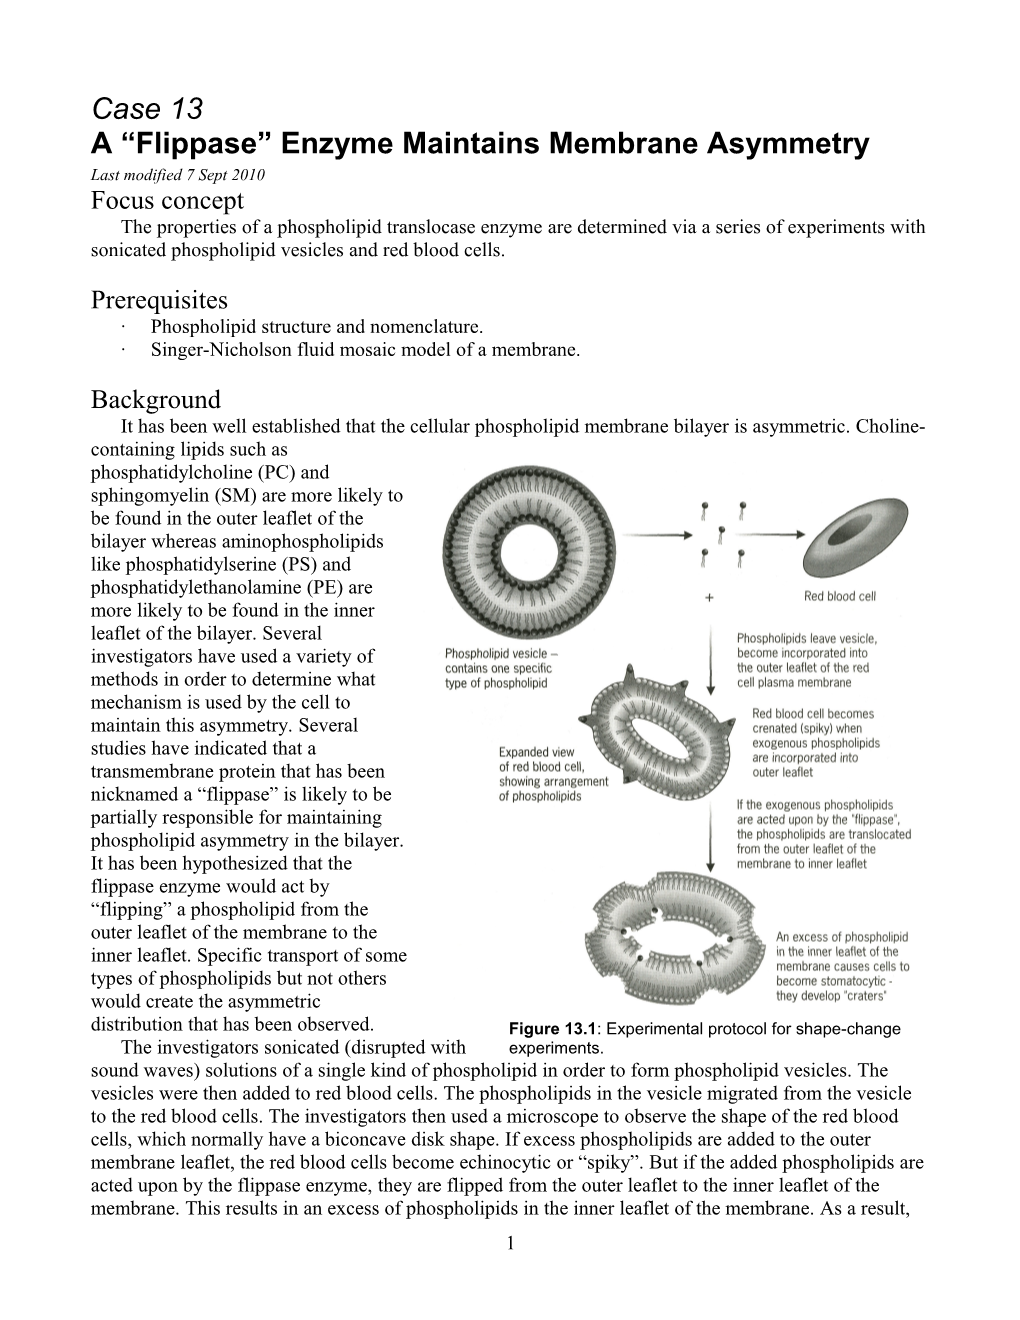 A Flippase Enzyme Maintains Membrane Asymmetry